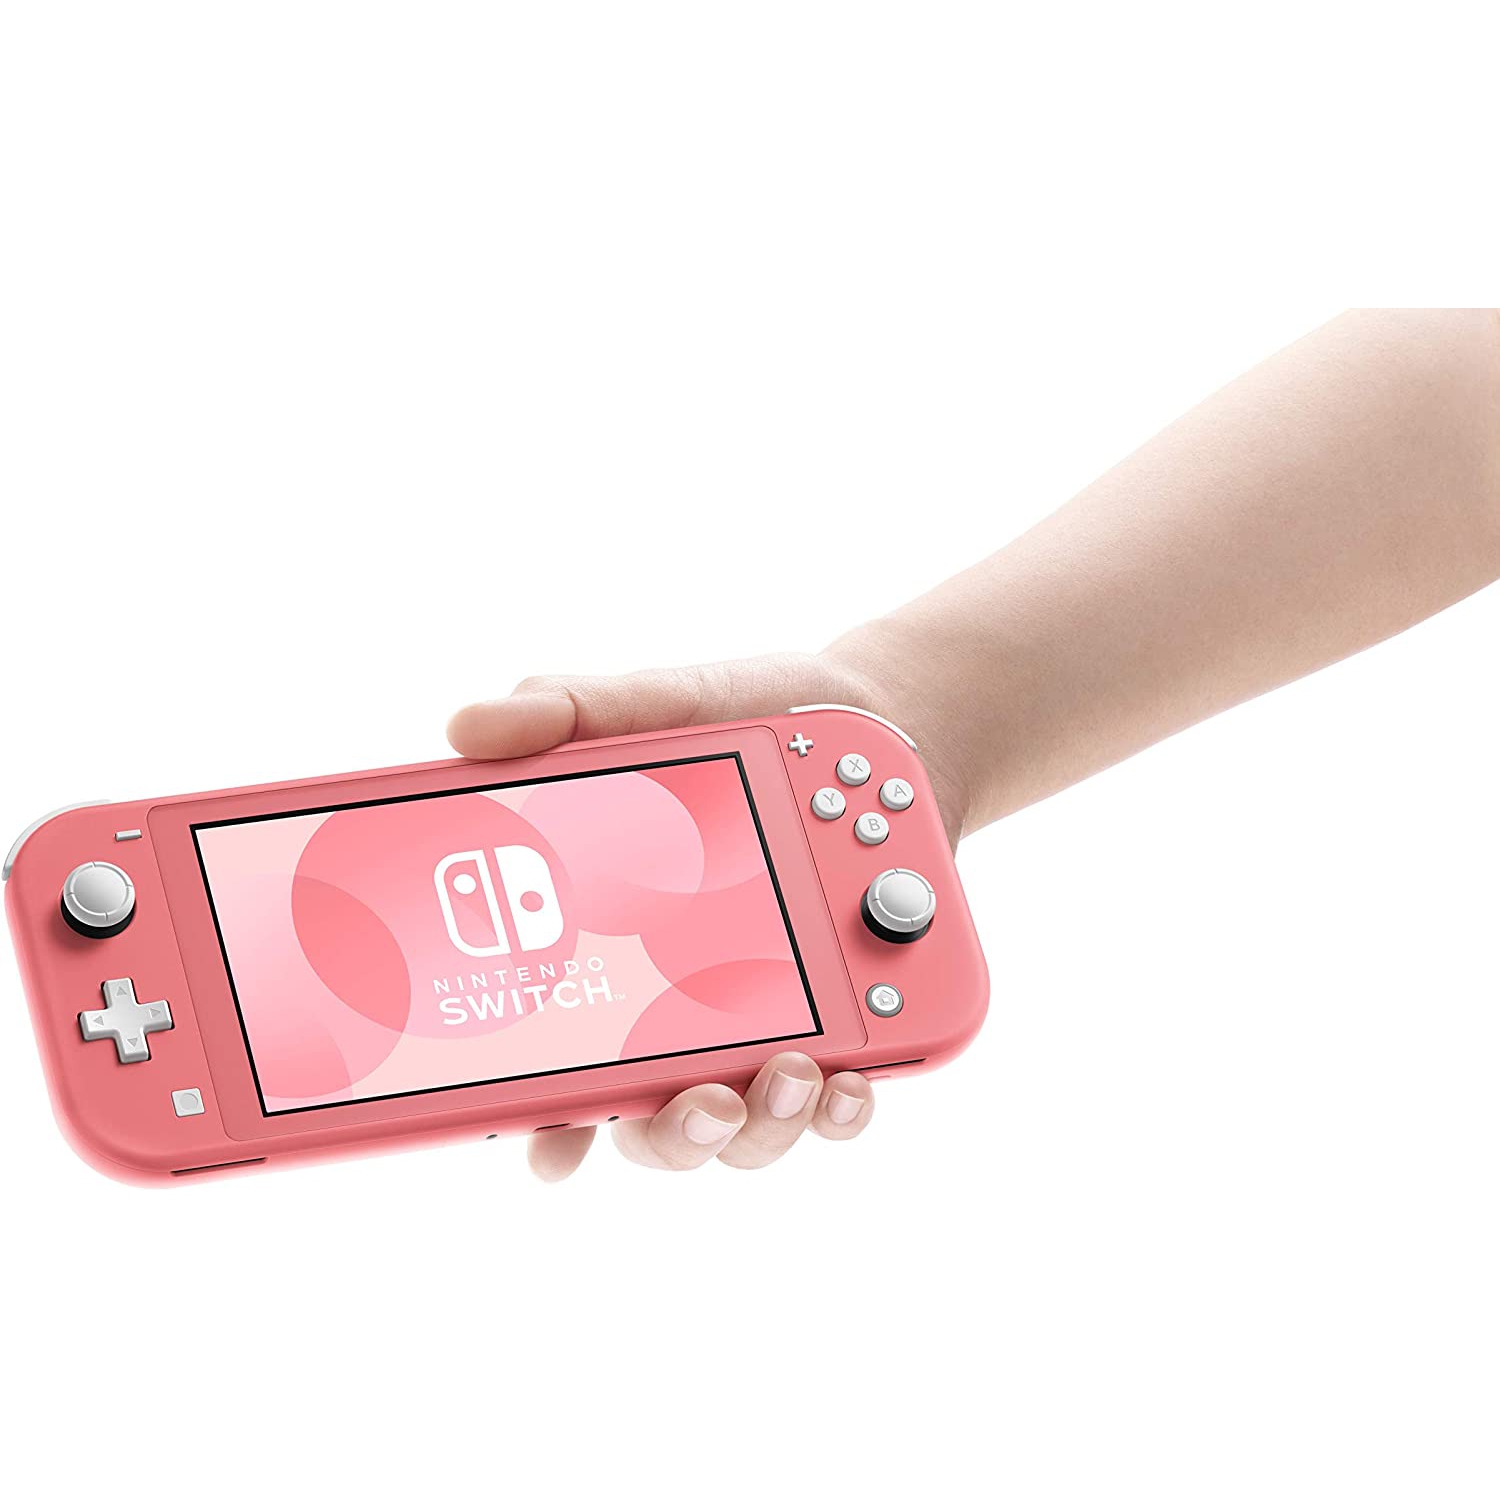 Nintendo Switch Lite Console (Coral) - Brand New